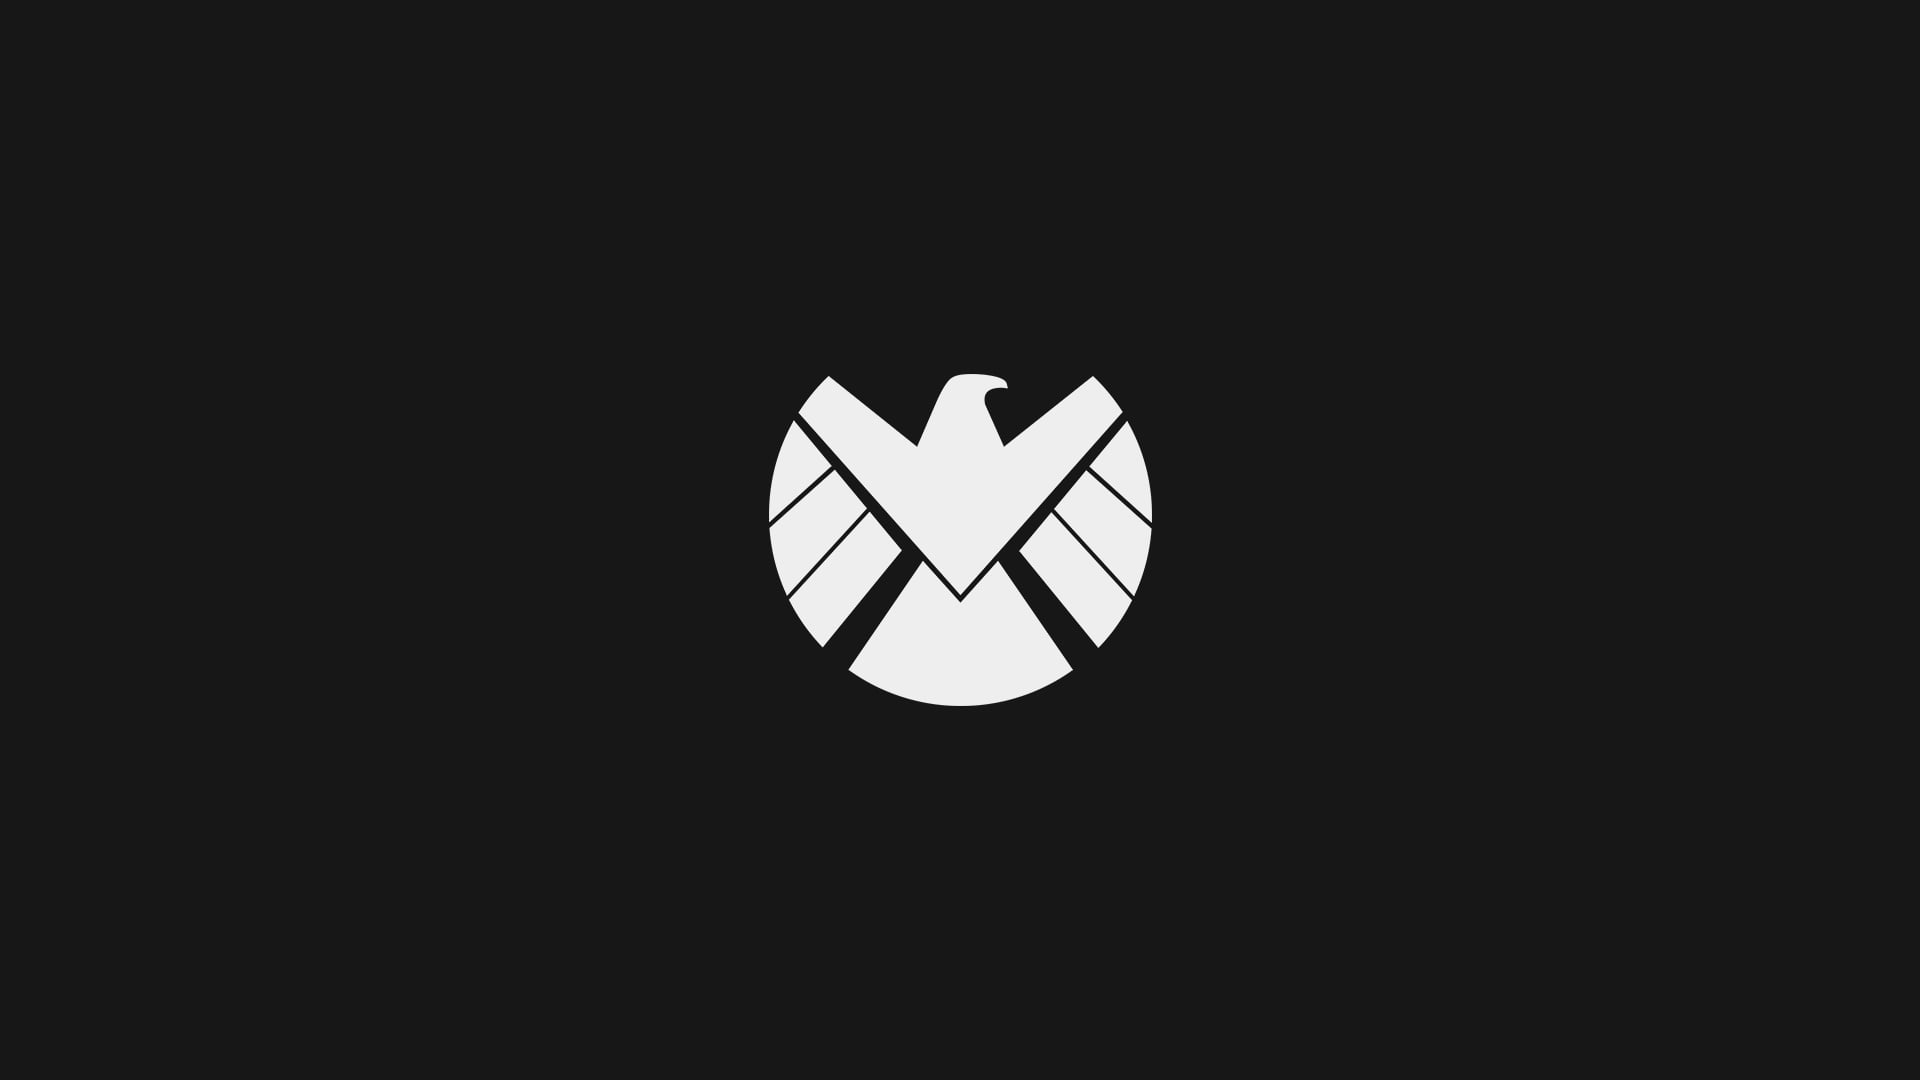 Avengers Shield logo with black background HD wallpaper. Wallpaper